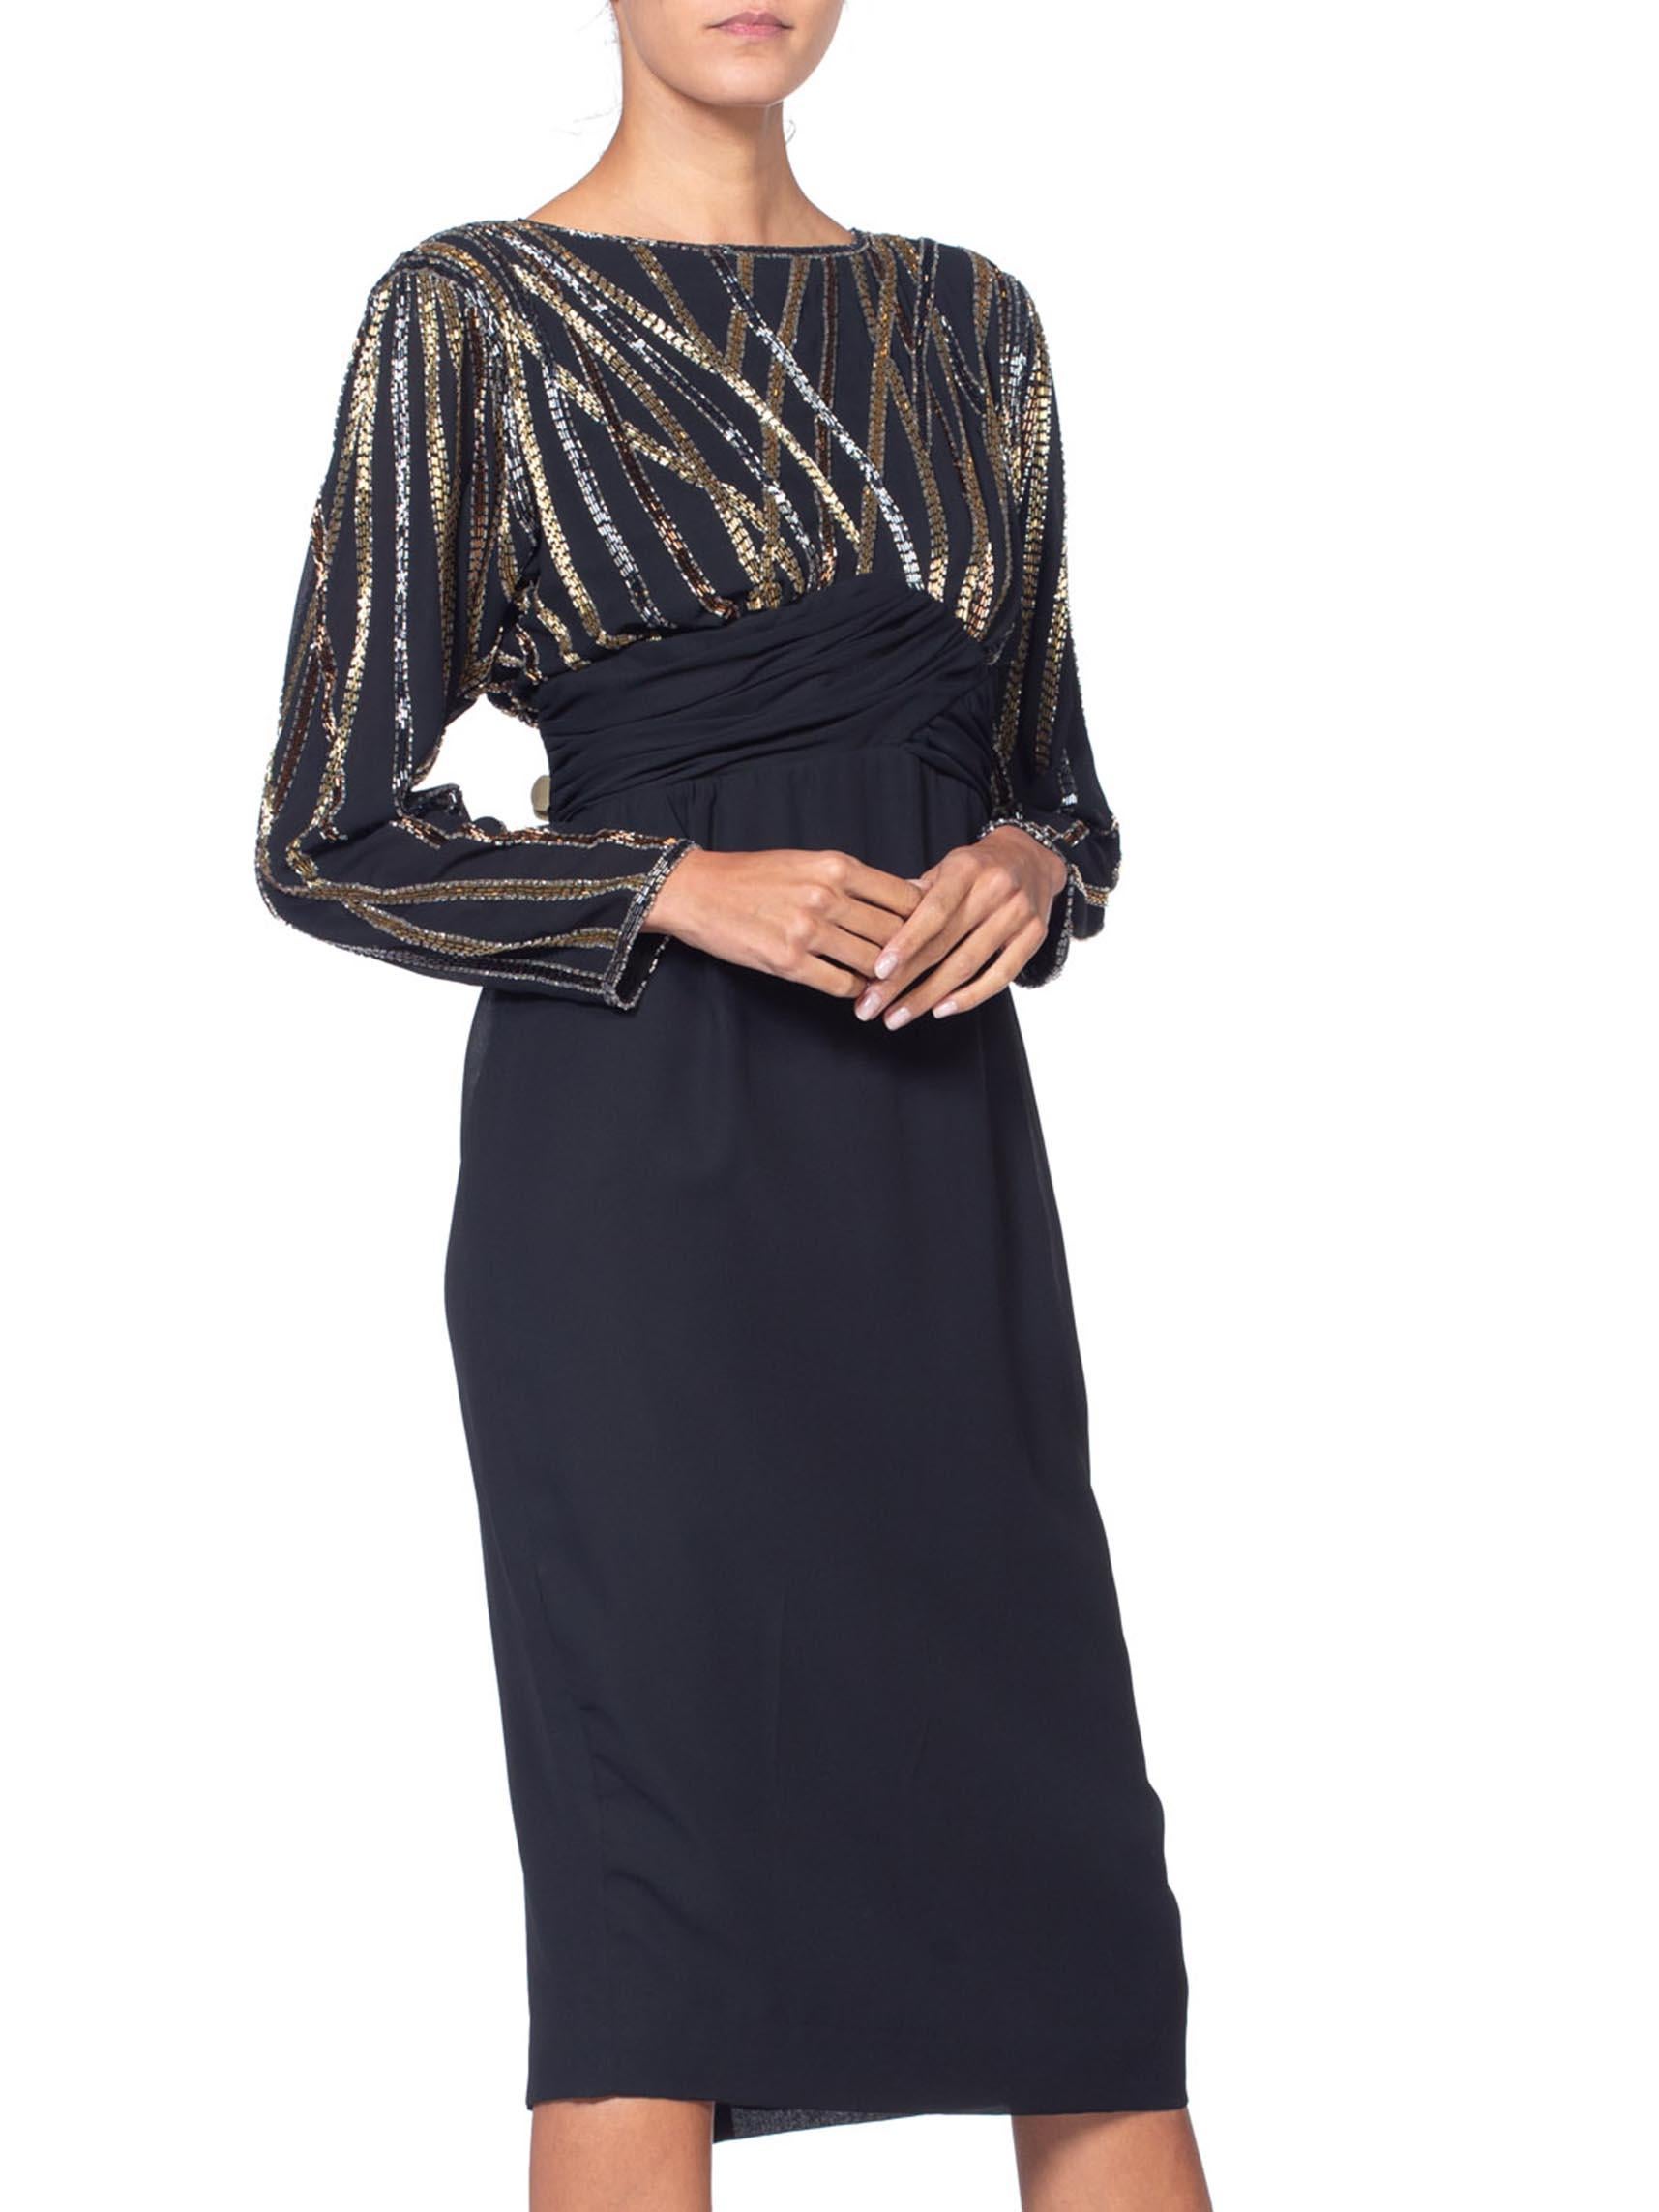 1980S BOB MACKIE Style Black Hand Beaded Polyester Chiffon Long Sleeve Cocktail Dress